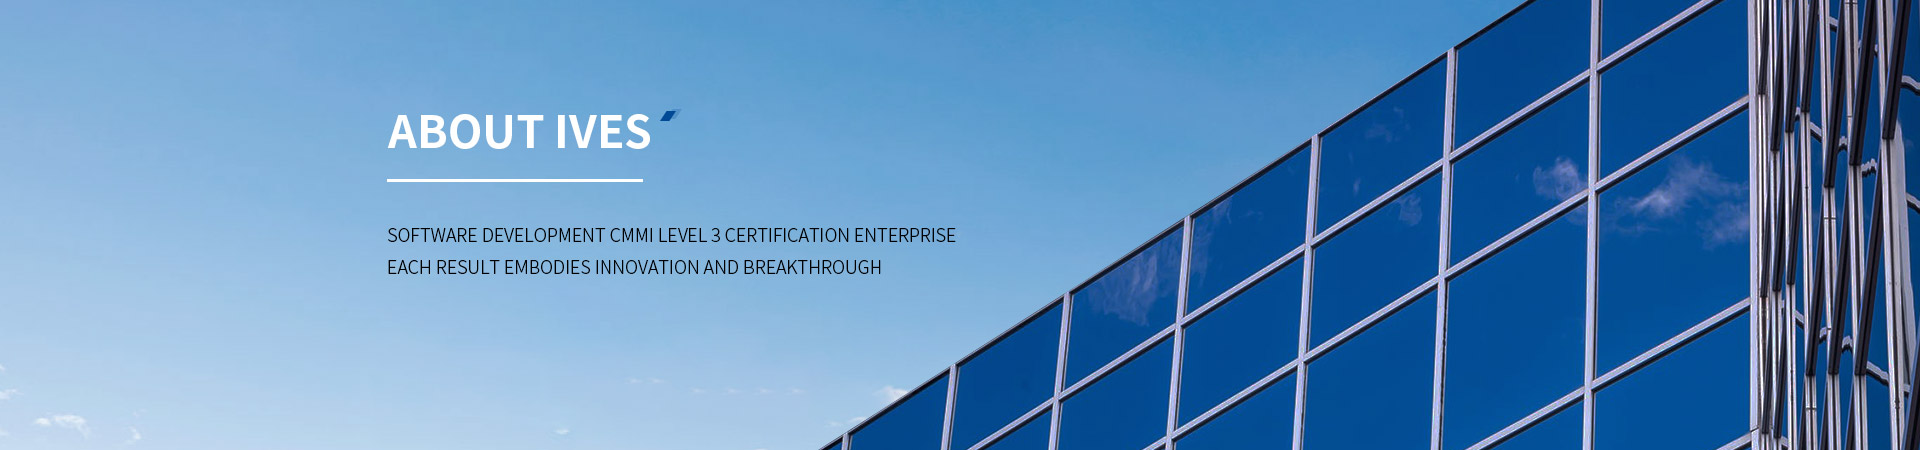 Software development CMMI Level 3 certification enterprise Each result embodies innovation and breakthrough